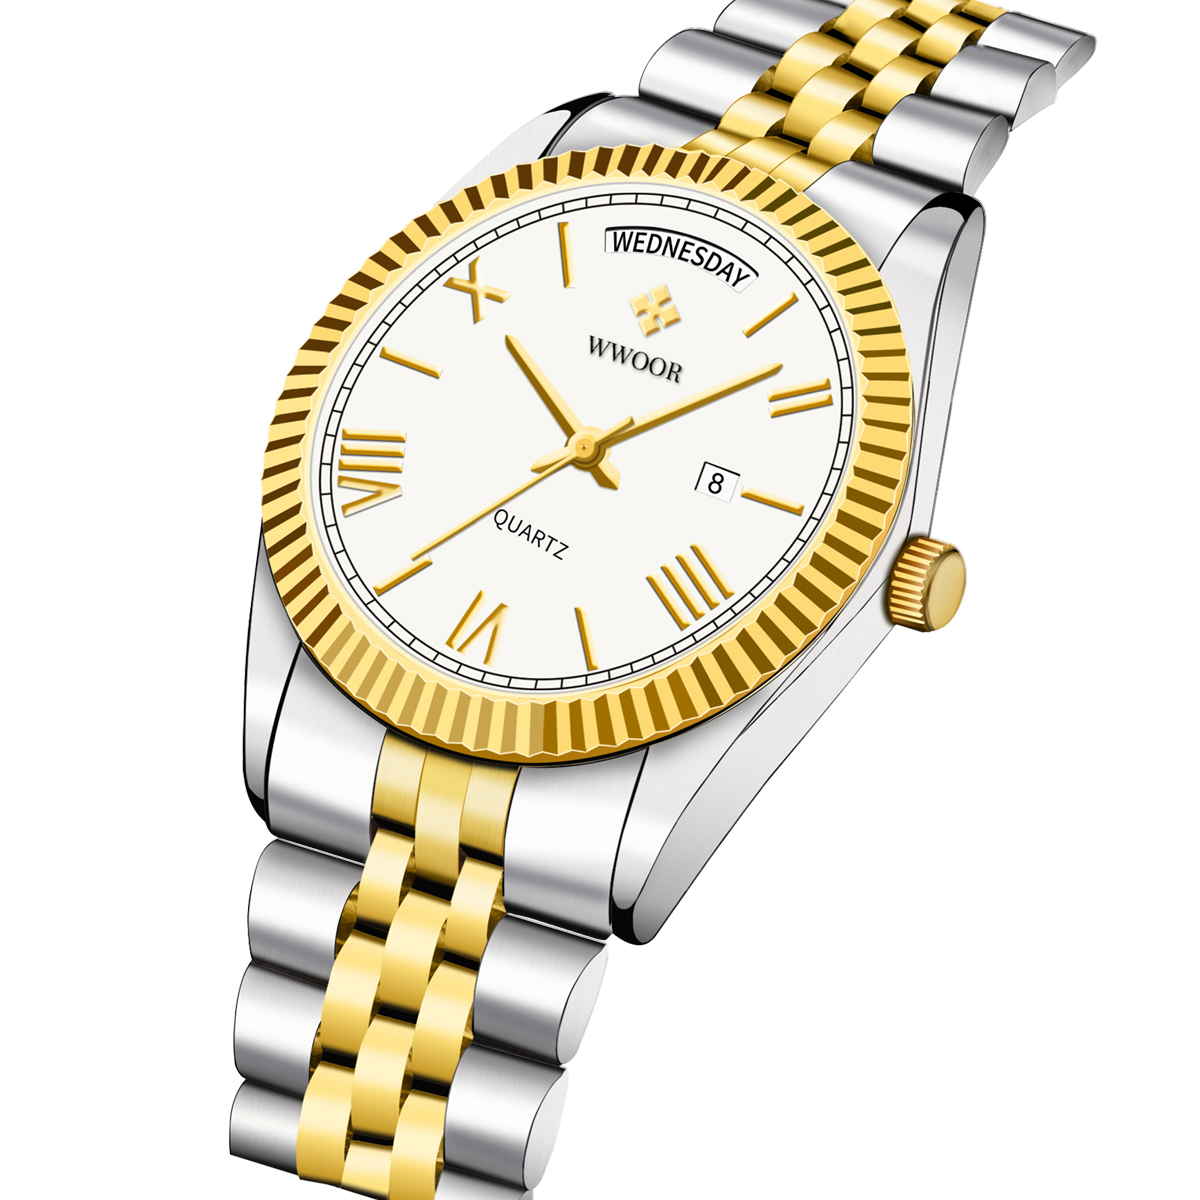 Relogio Masculino WWOOR Gold Watch Men Square Mens Watches Top Brand Luxury  Golden Quartz Stainless Steel Waterproof Wrist Watch, क्वार्ट्ज कलाई घड़ी,  क्वार्ट्ज वृस्त वॉच - ALL IN ONE, Kangra | ID: 2853109636355